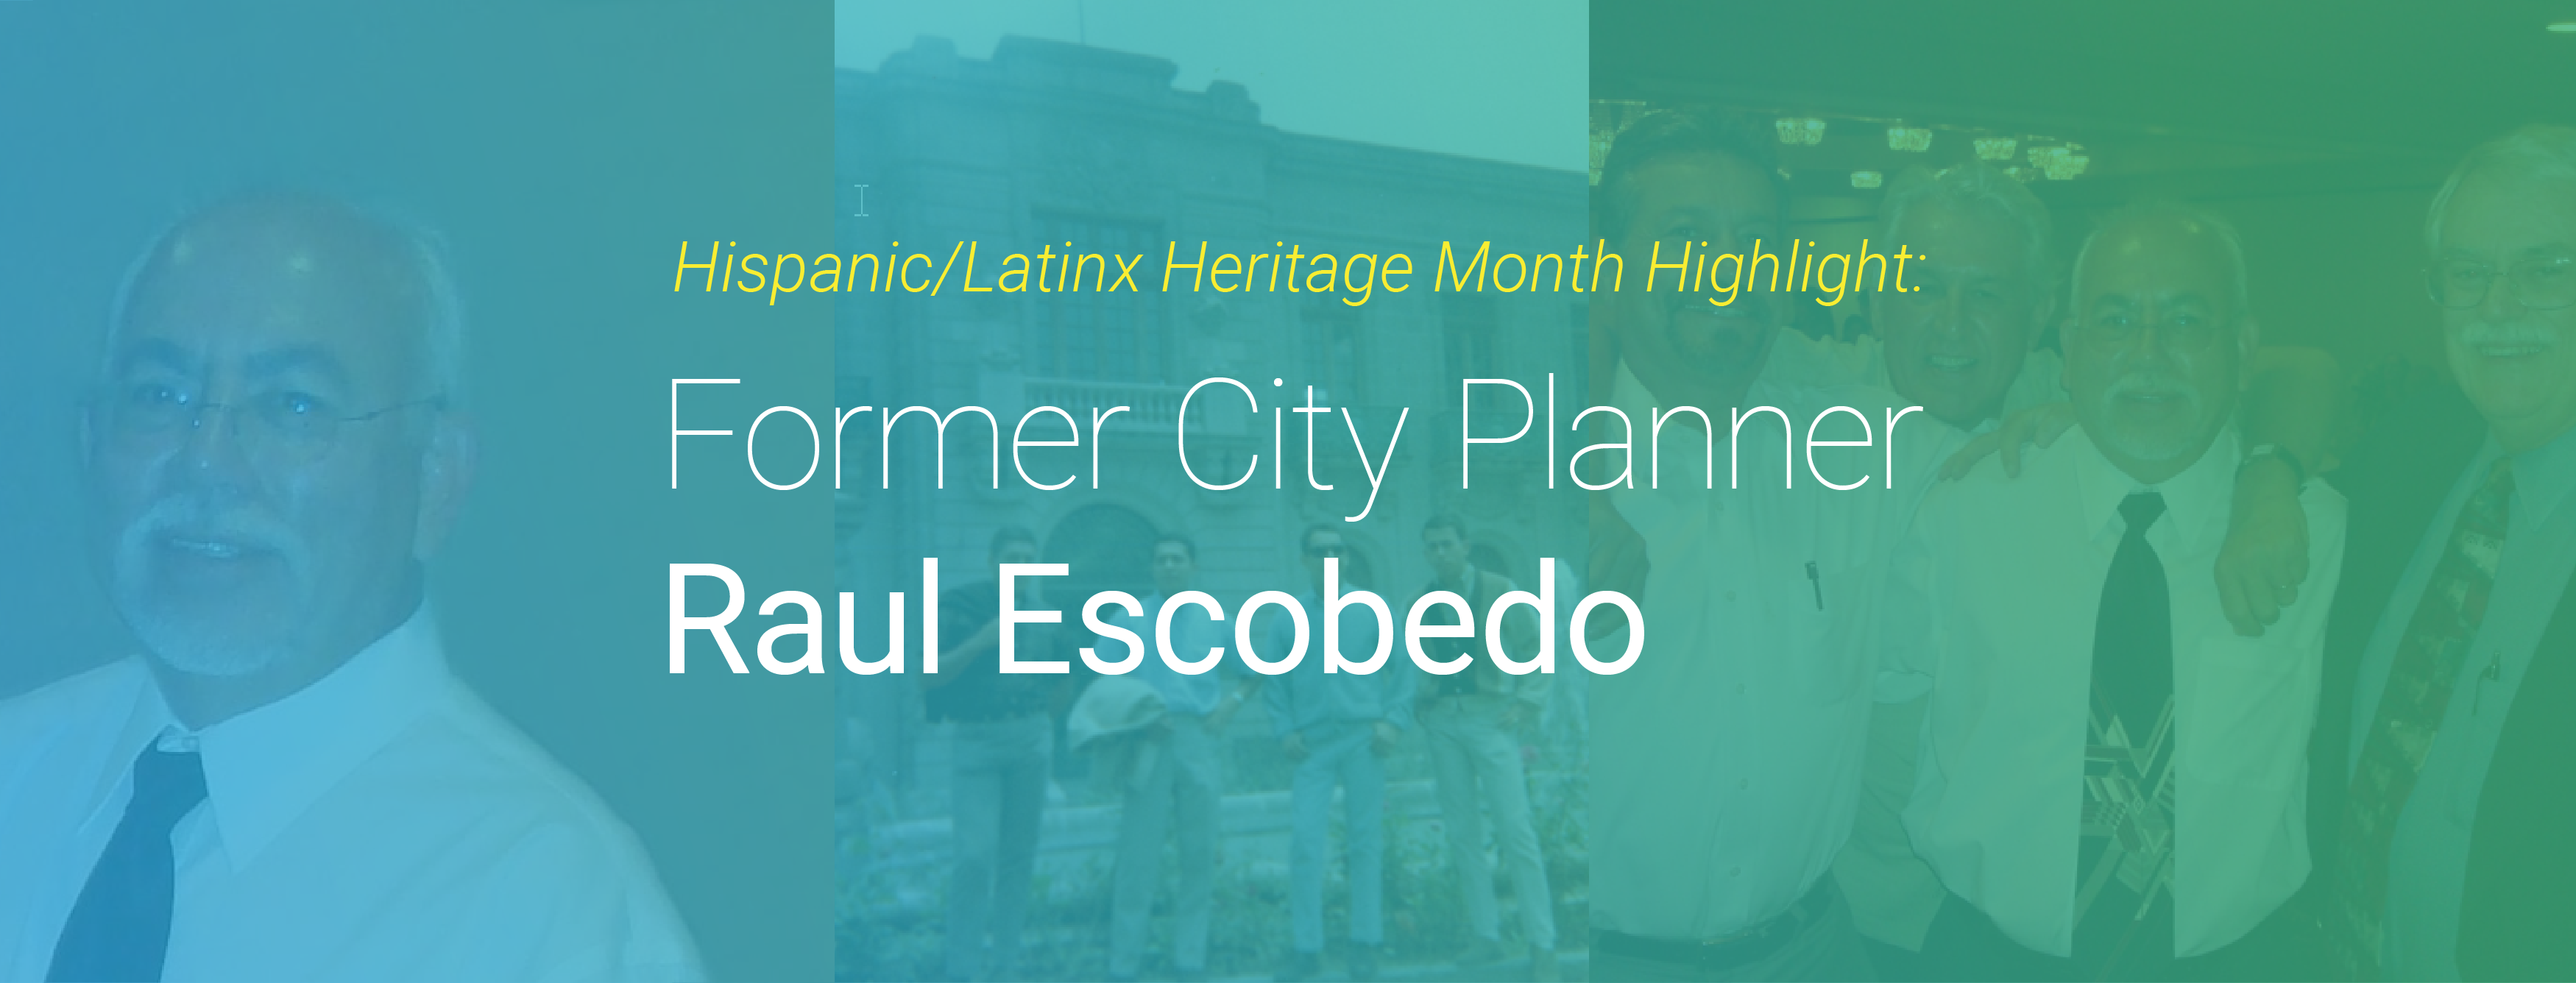 Hispanic/Latinx Heritage Month Highlight: Former City Planner Raul Escobedo